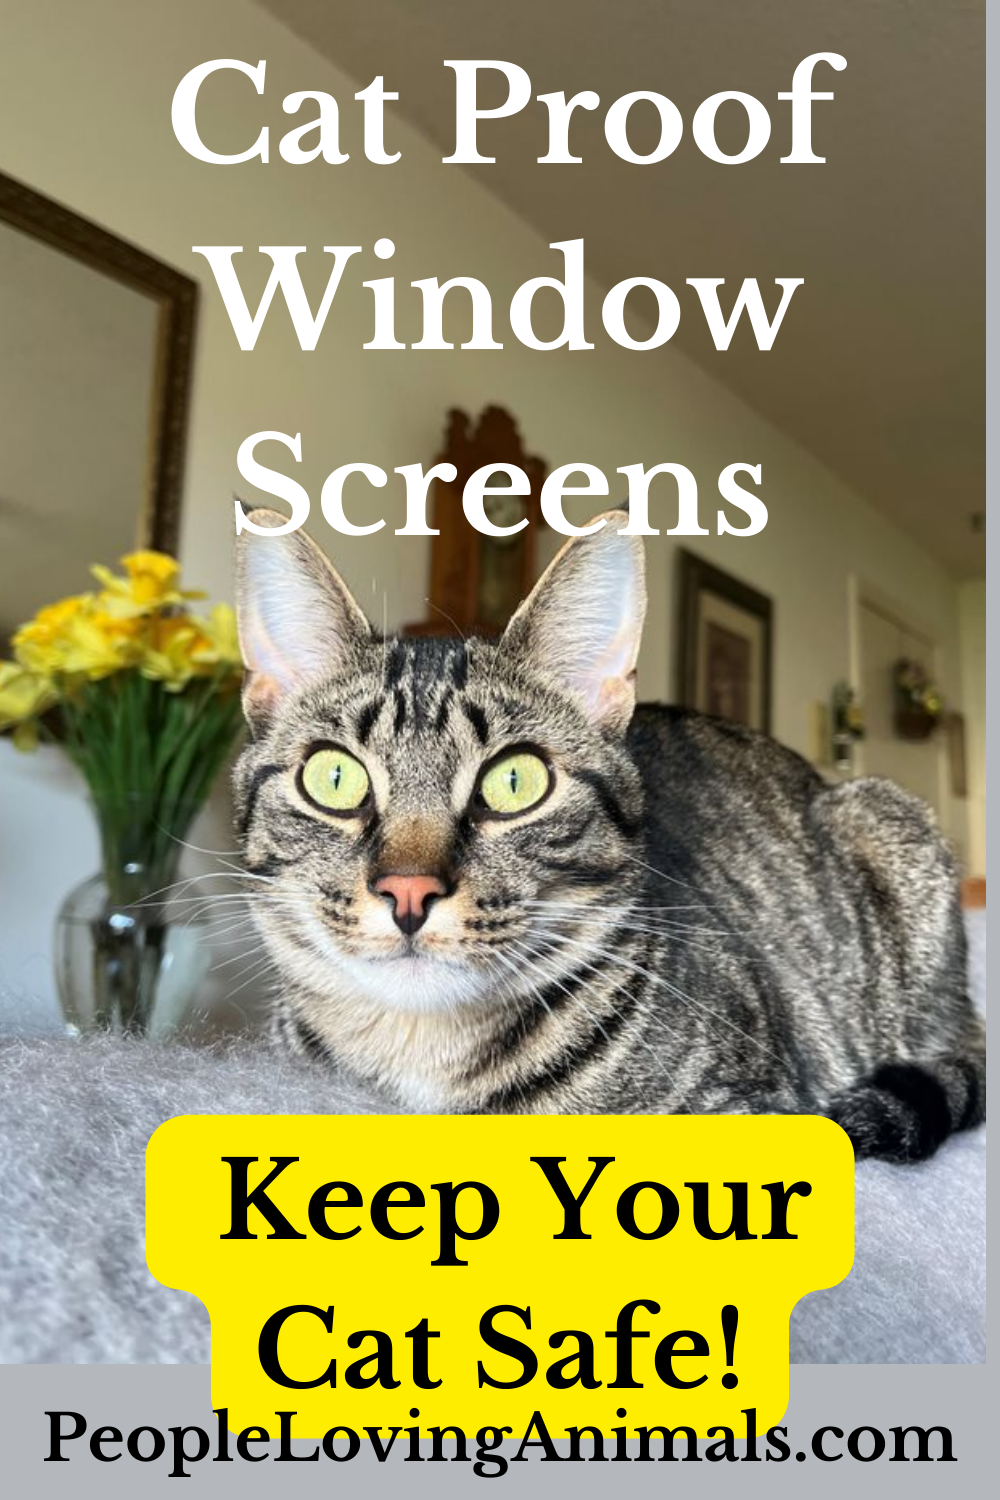 Cat Proof Window Screens - Keep Your Cat Safe!